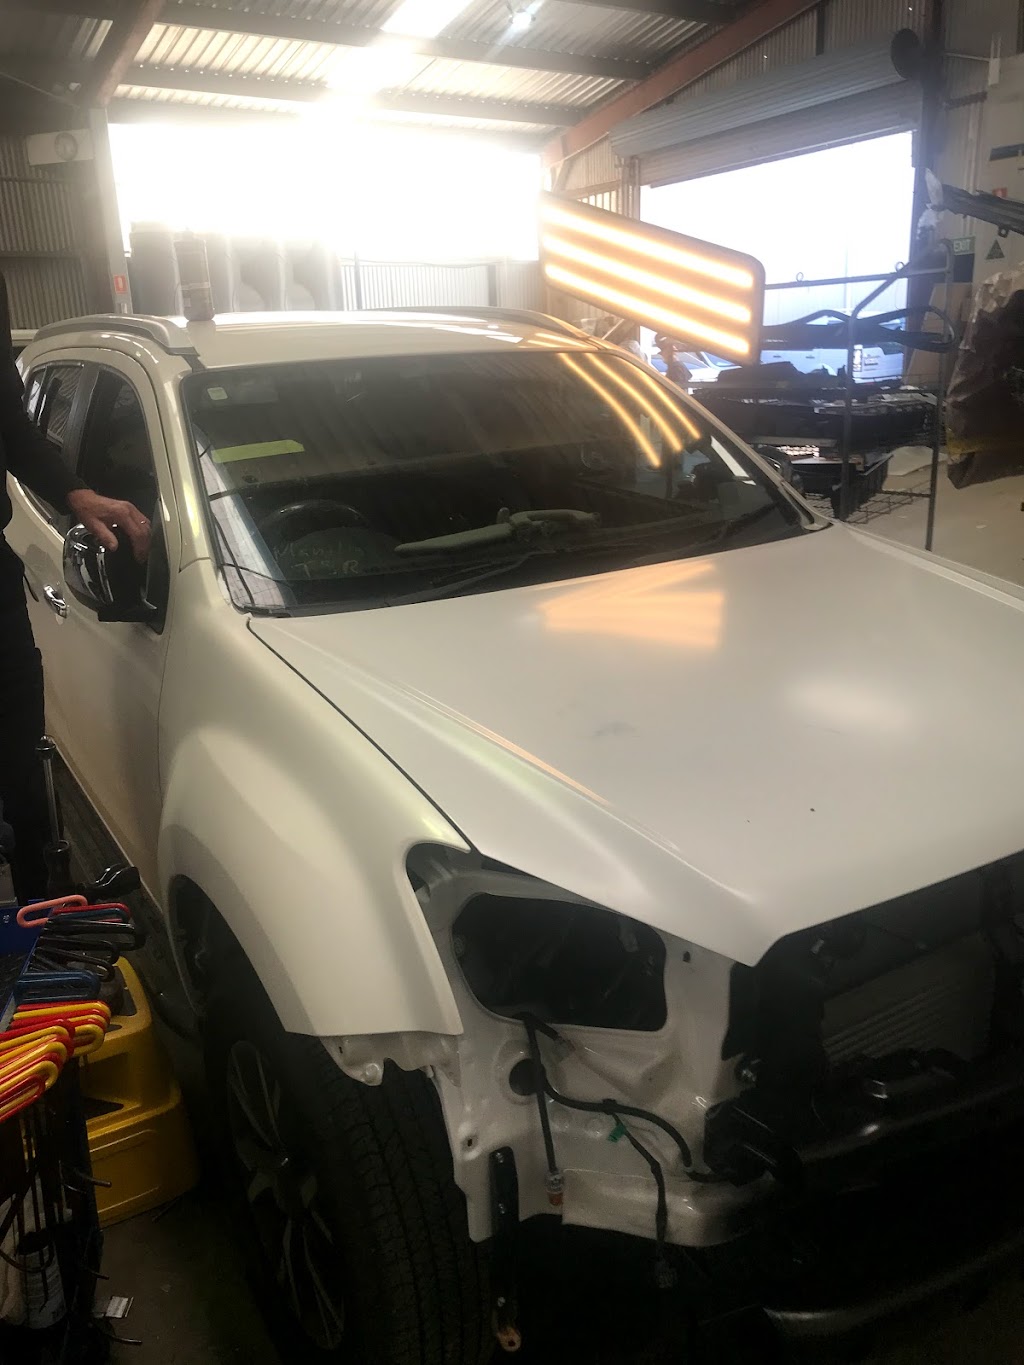 Deans windscreens | car repair | 42 Hill St, East Tamworth NSW 2340, Australia | 0428001211 OR +61 428 001 211